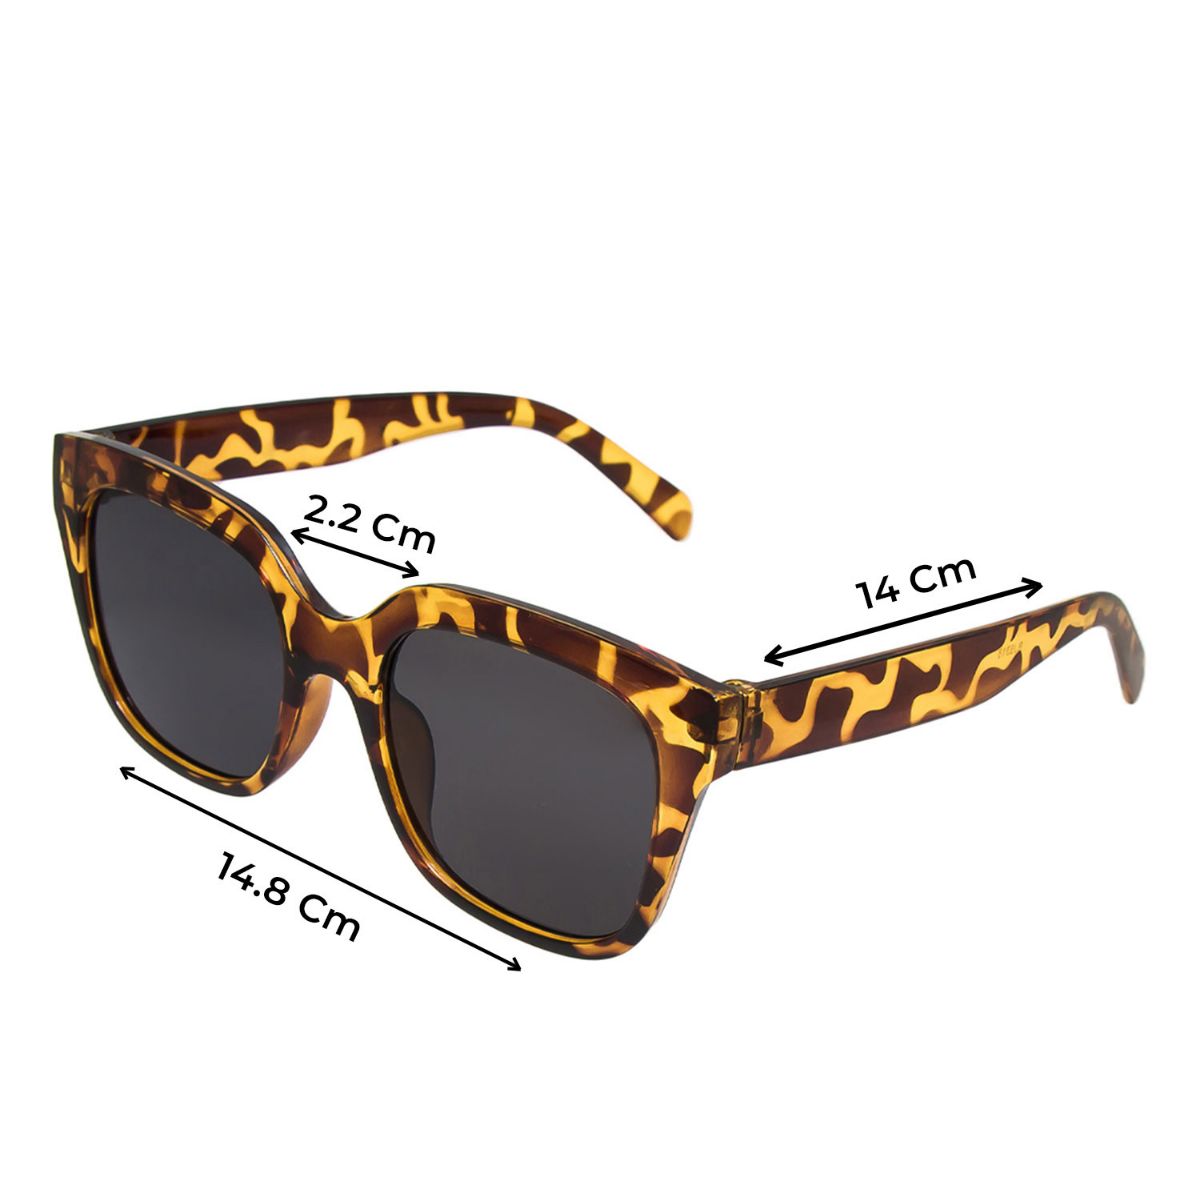 Buy Printed Frame Tinted Wayfarer Sunglasses with Nose Pads | Splash KSA